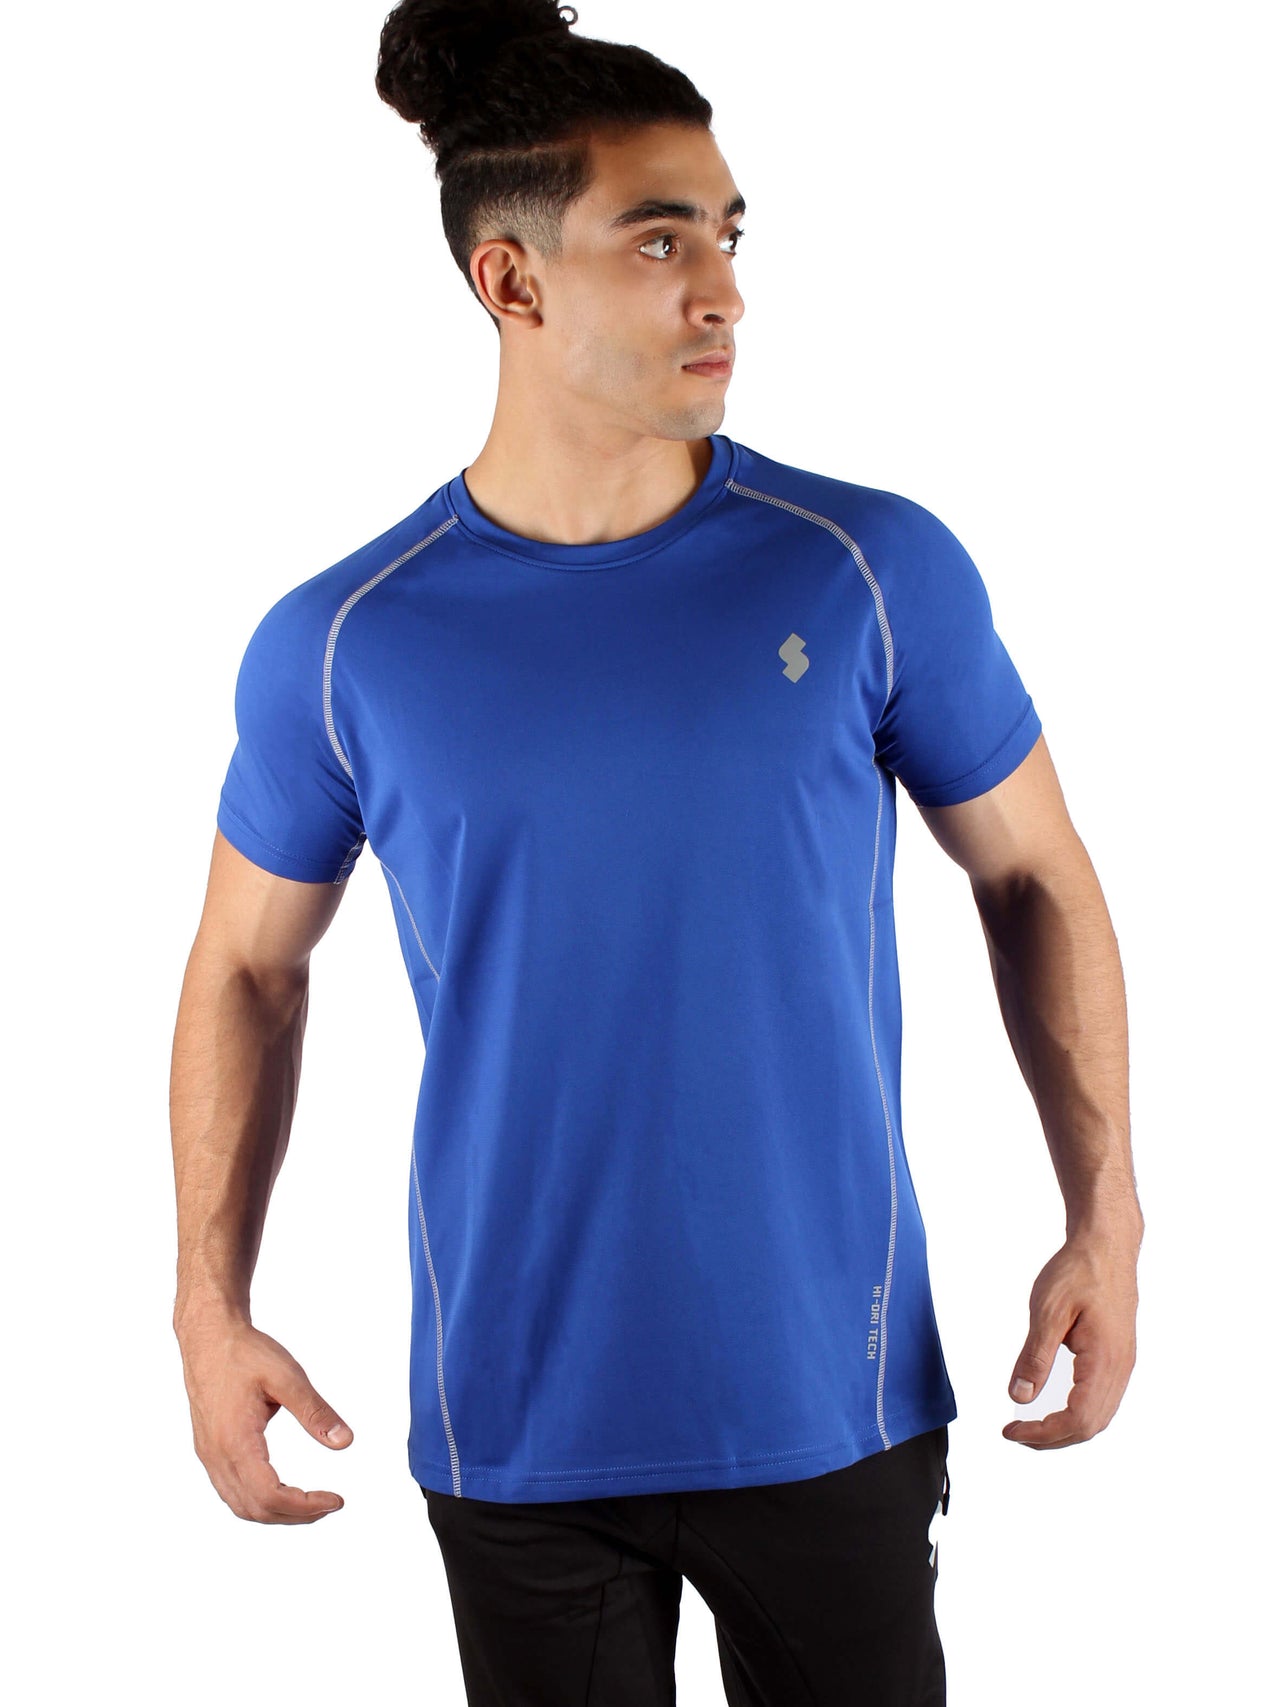 T18 Hi-Dri Raglan T-Shirt - Royal Blue